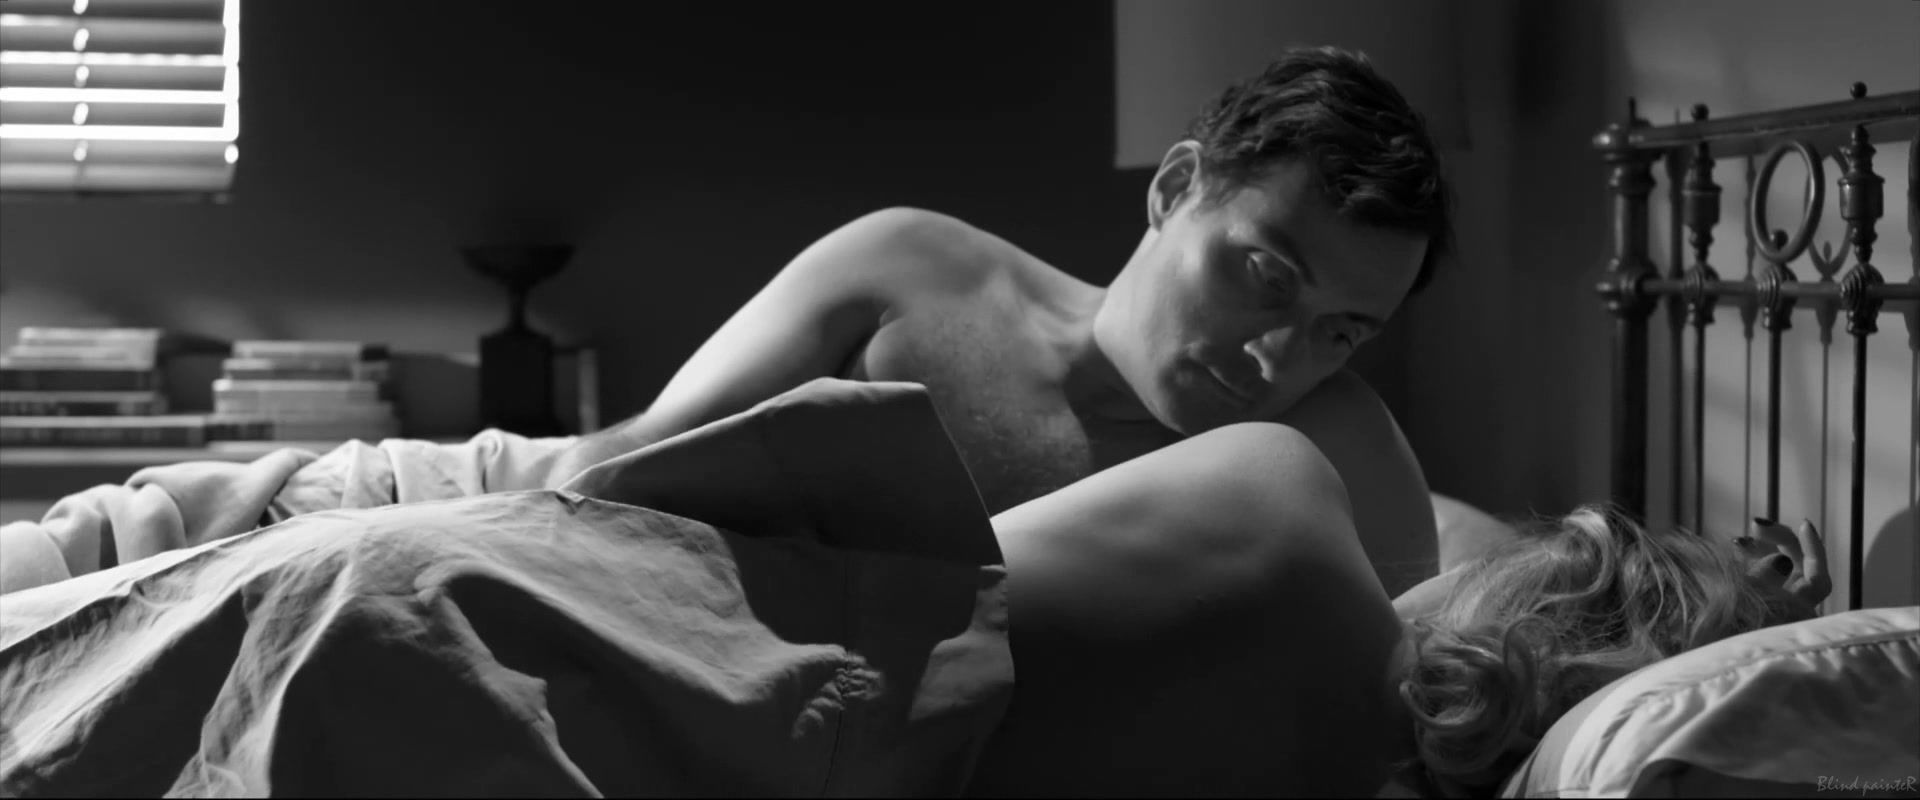 Masseuse Sex video Malin Akerman nude - Hotel Noir (2012) Tubent